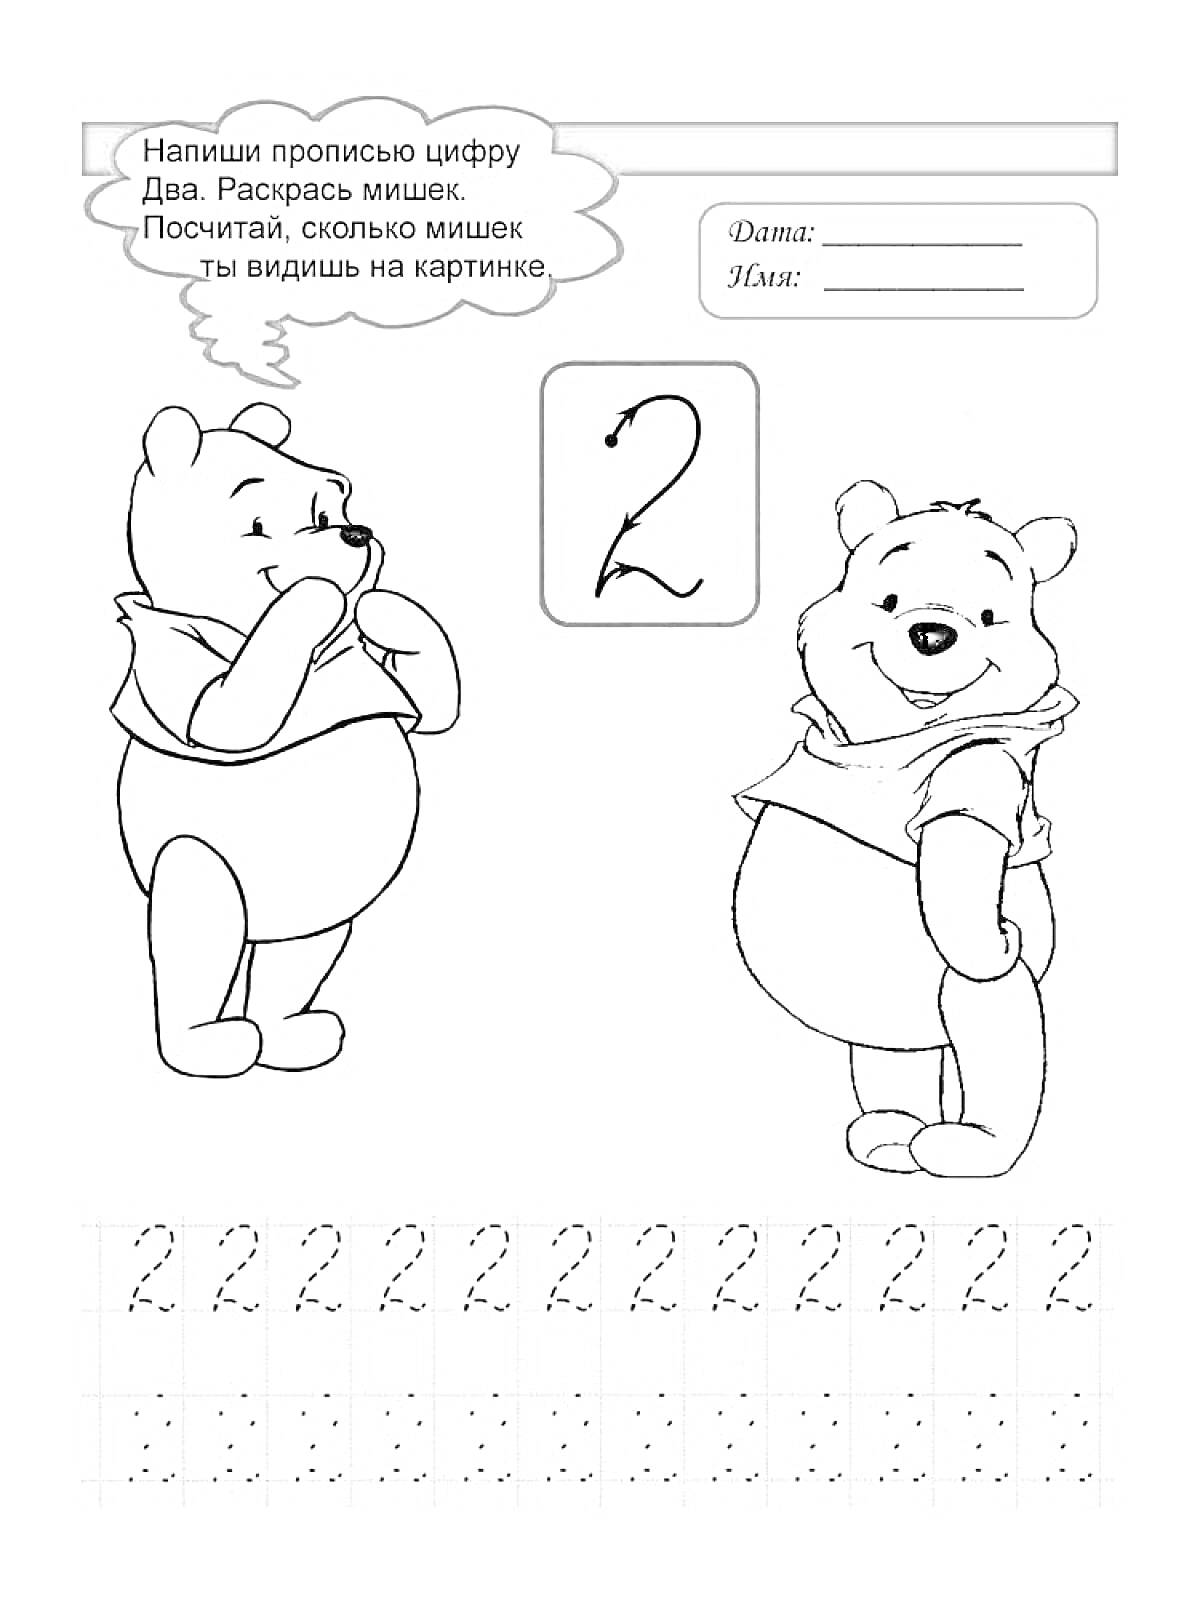 Раскраска Пропись цифры 2 с двумя персонажами медвежат и заданиями на подсчет и раскрашивание